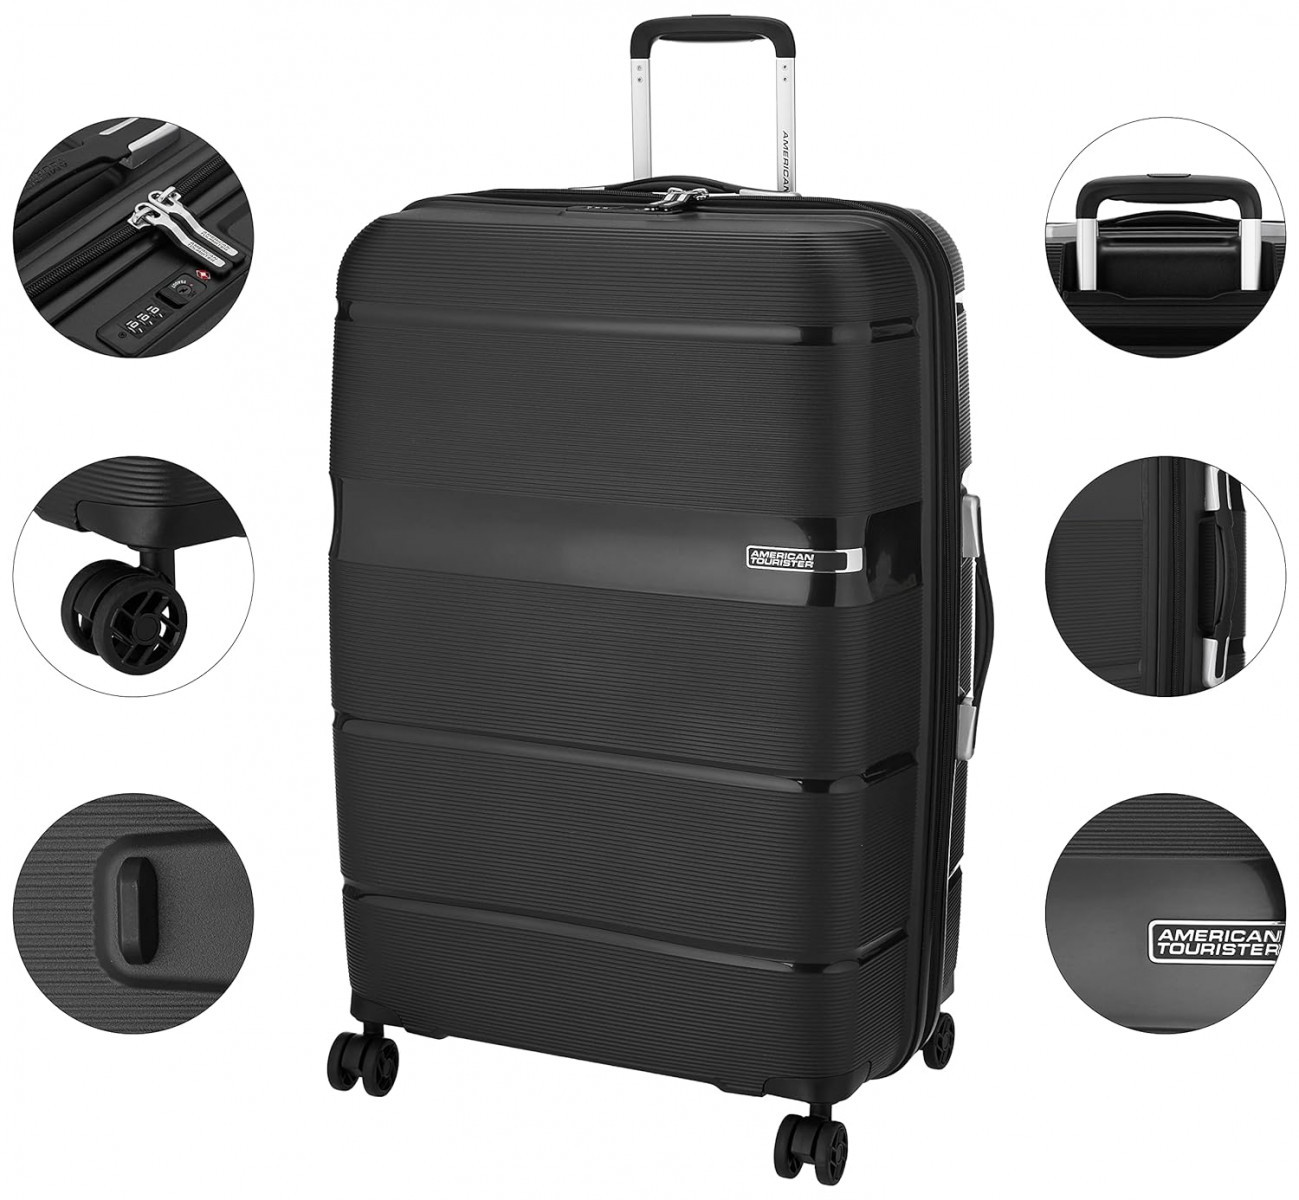 American Tourister Trolley Bag for Travel  LINEX 77 Cms Polypropylene Hardsided Large Check-in Luggage Bag  Suitcase for Travel  Trolley Bag for Travelling Black